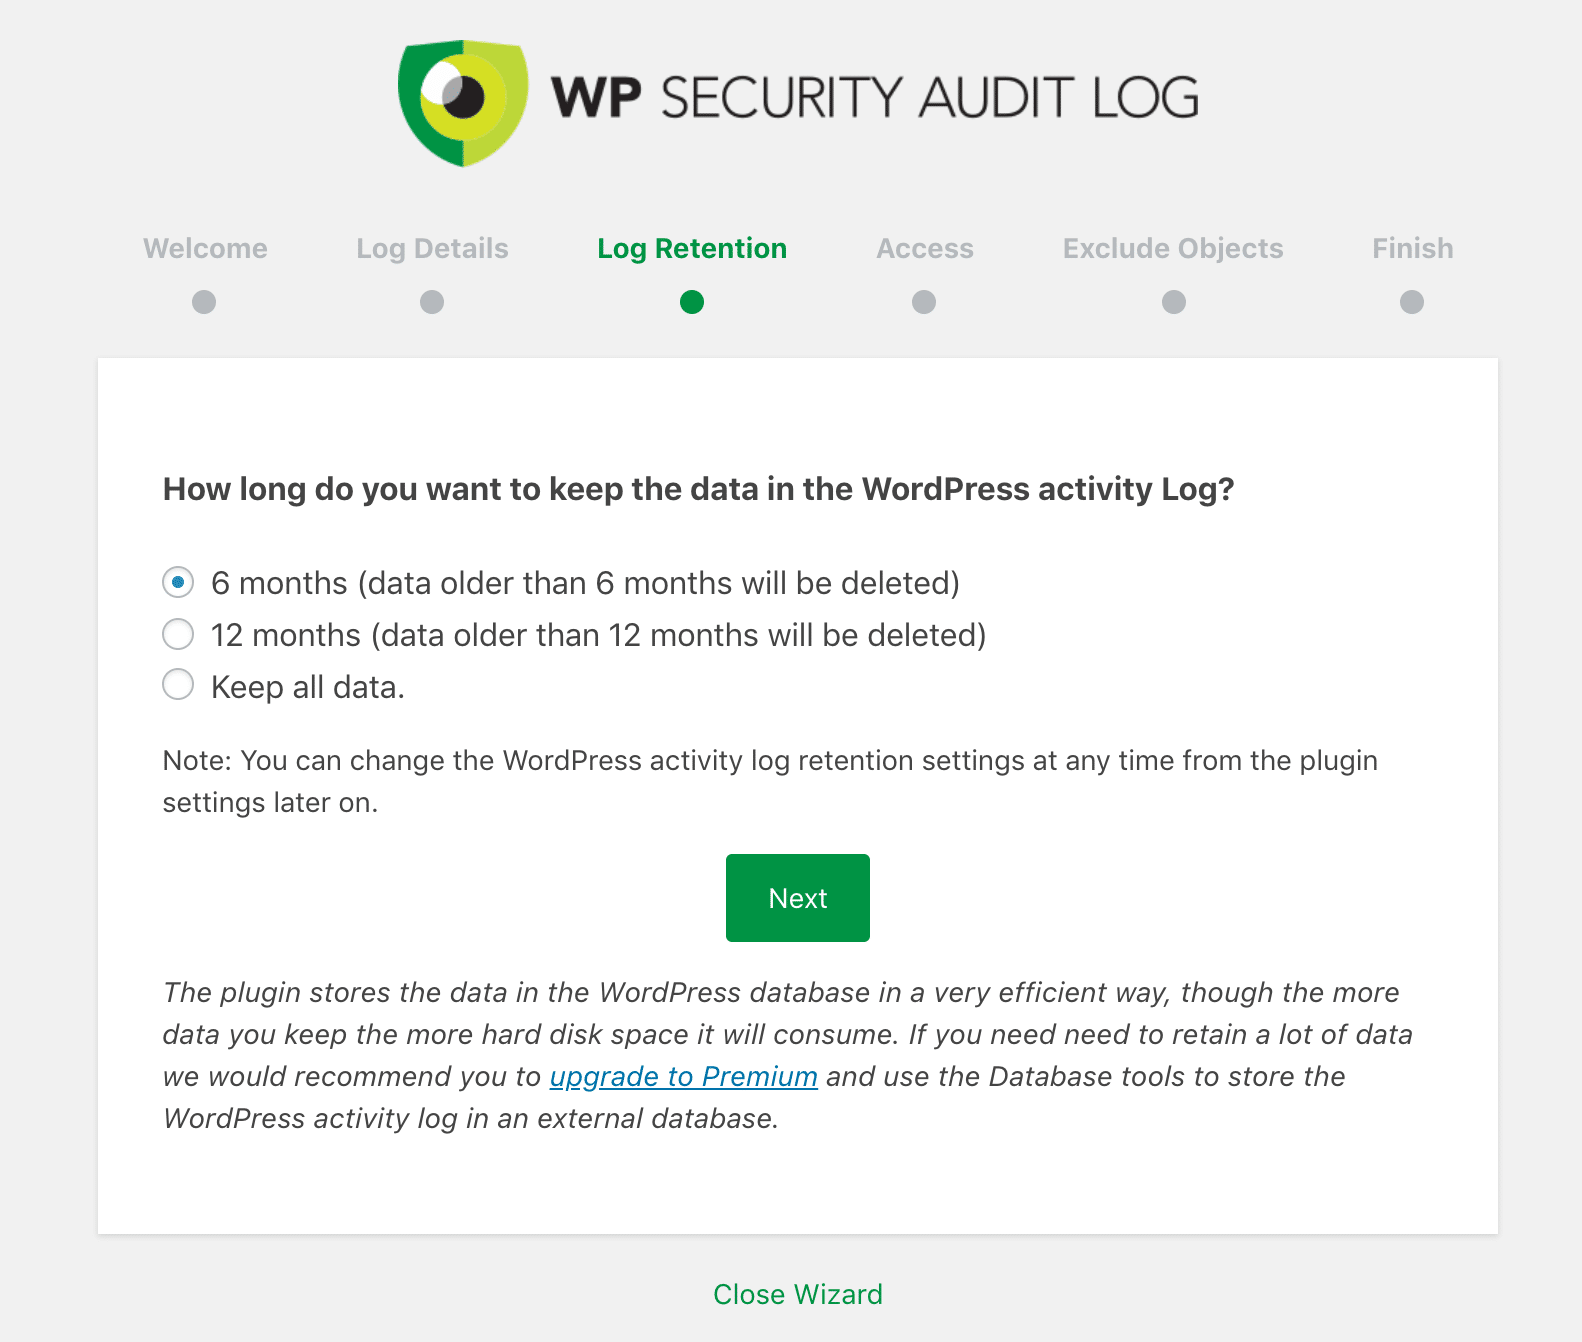 WP Security Audit Log data retention